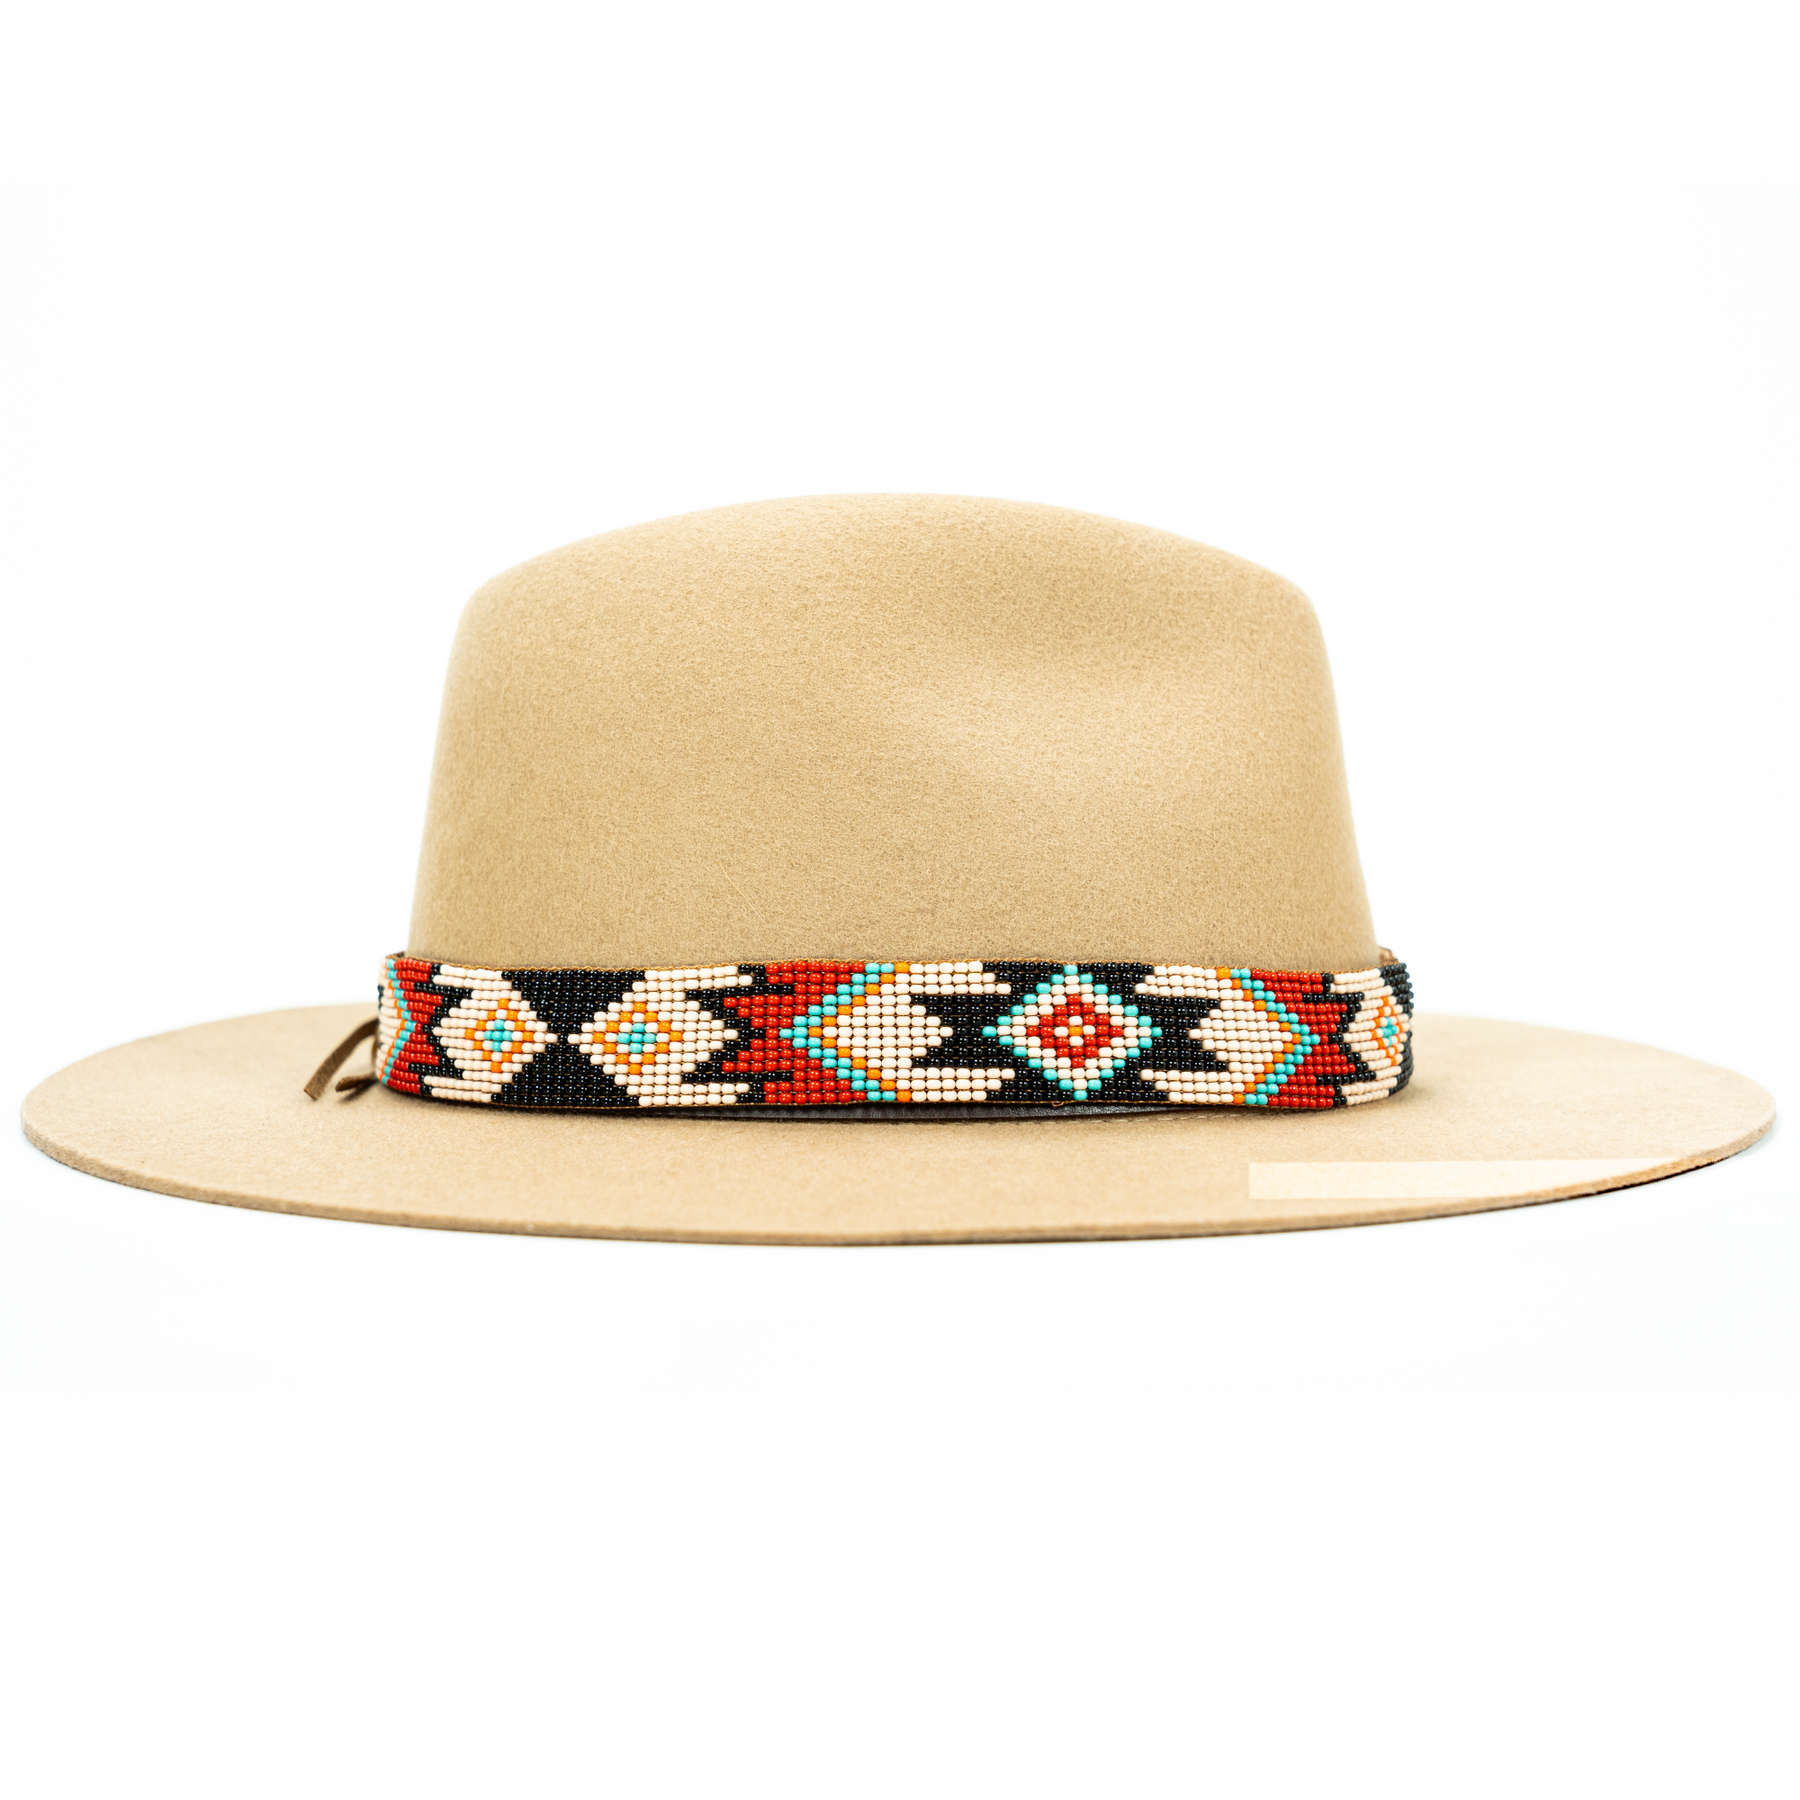 Aztec Sambboho Hatband  Beaded hat bands, Hat band, Beaded hat